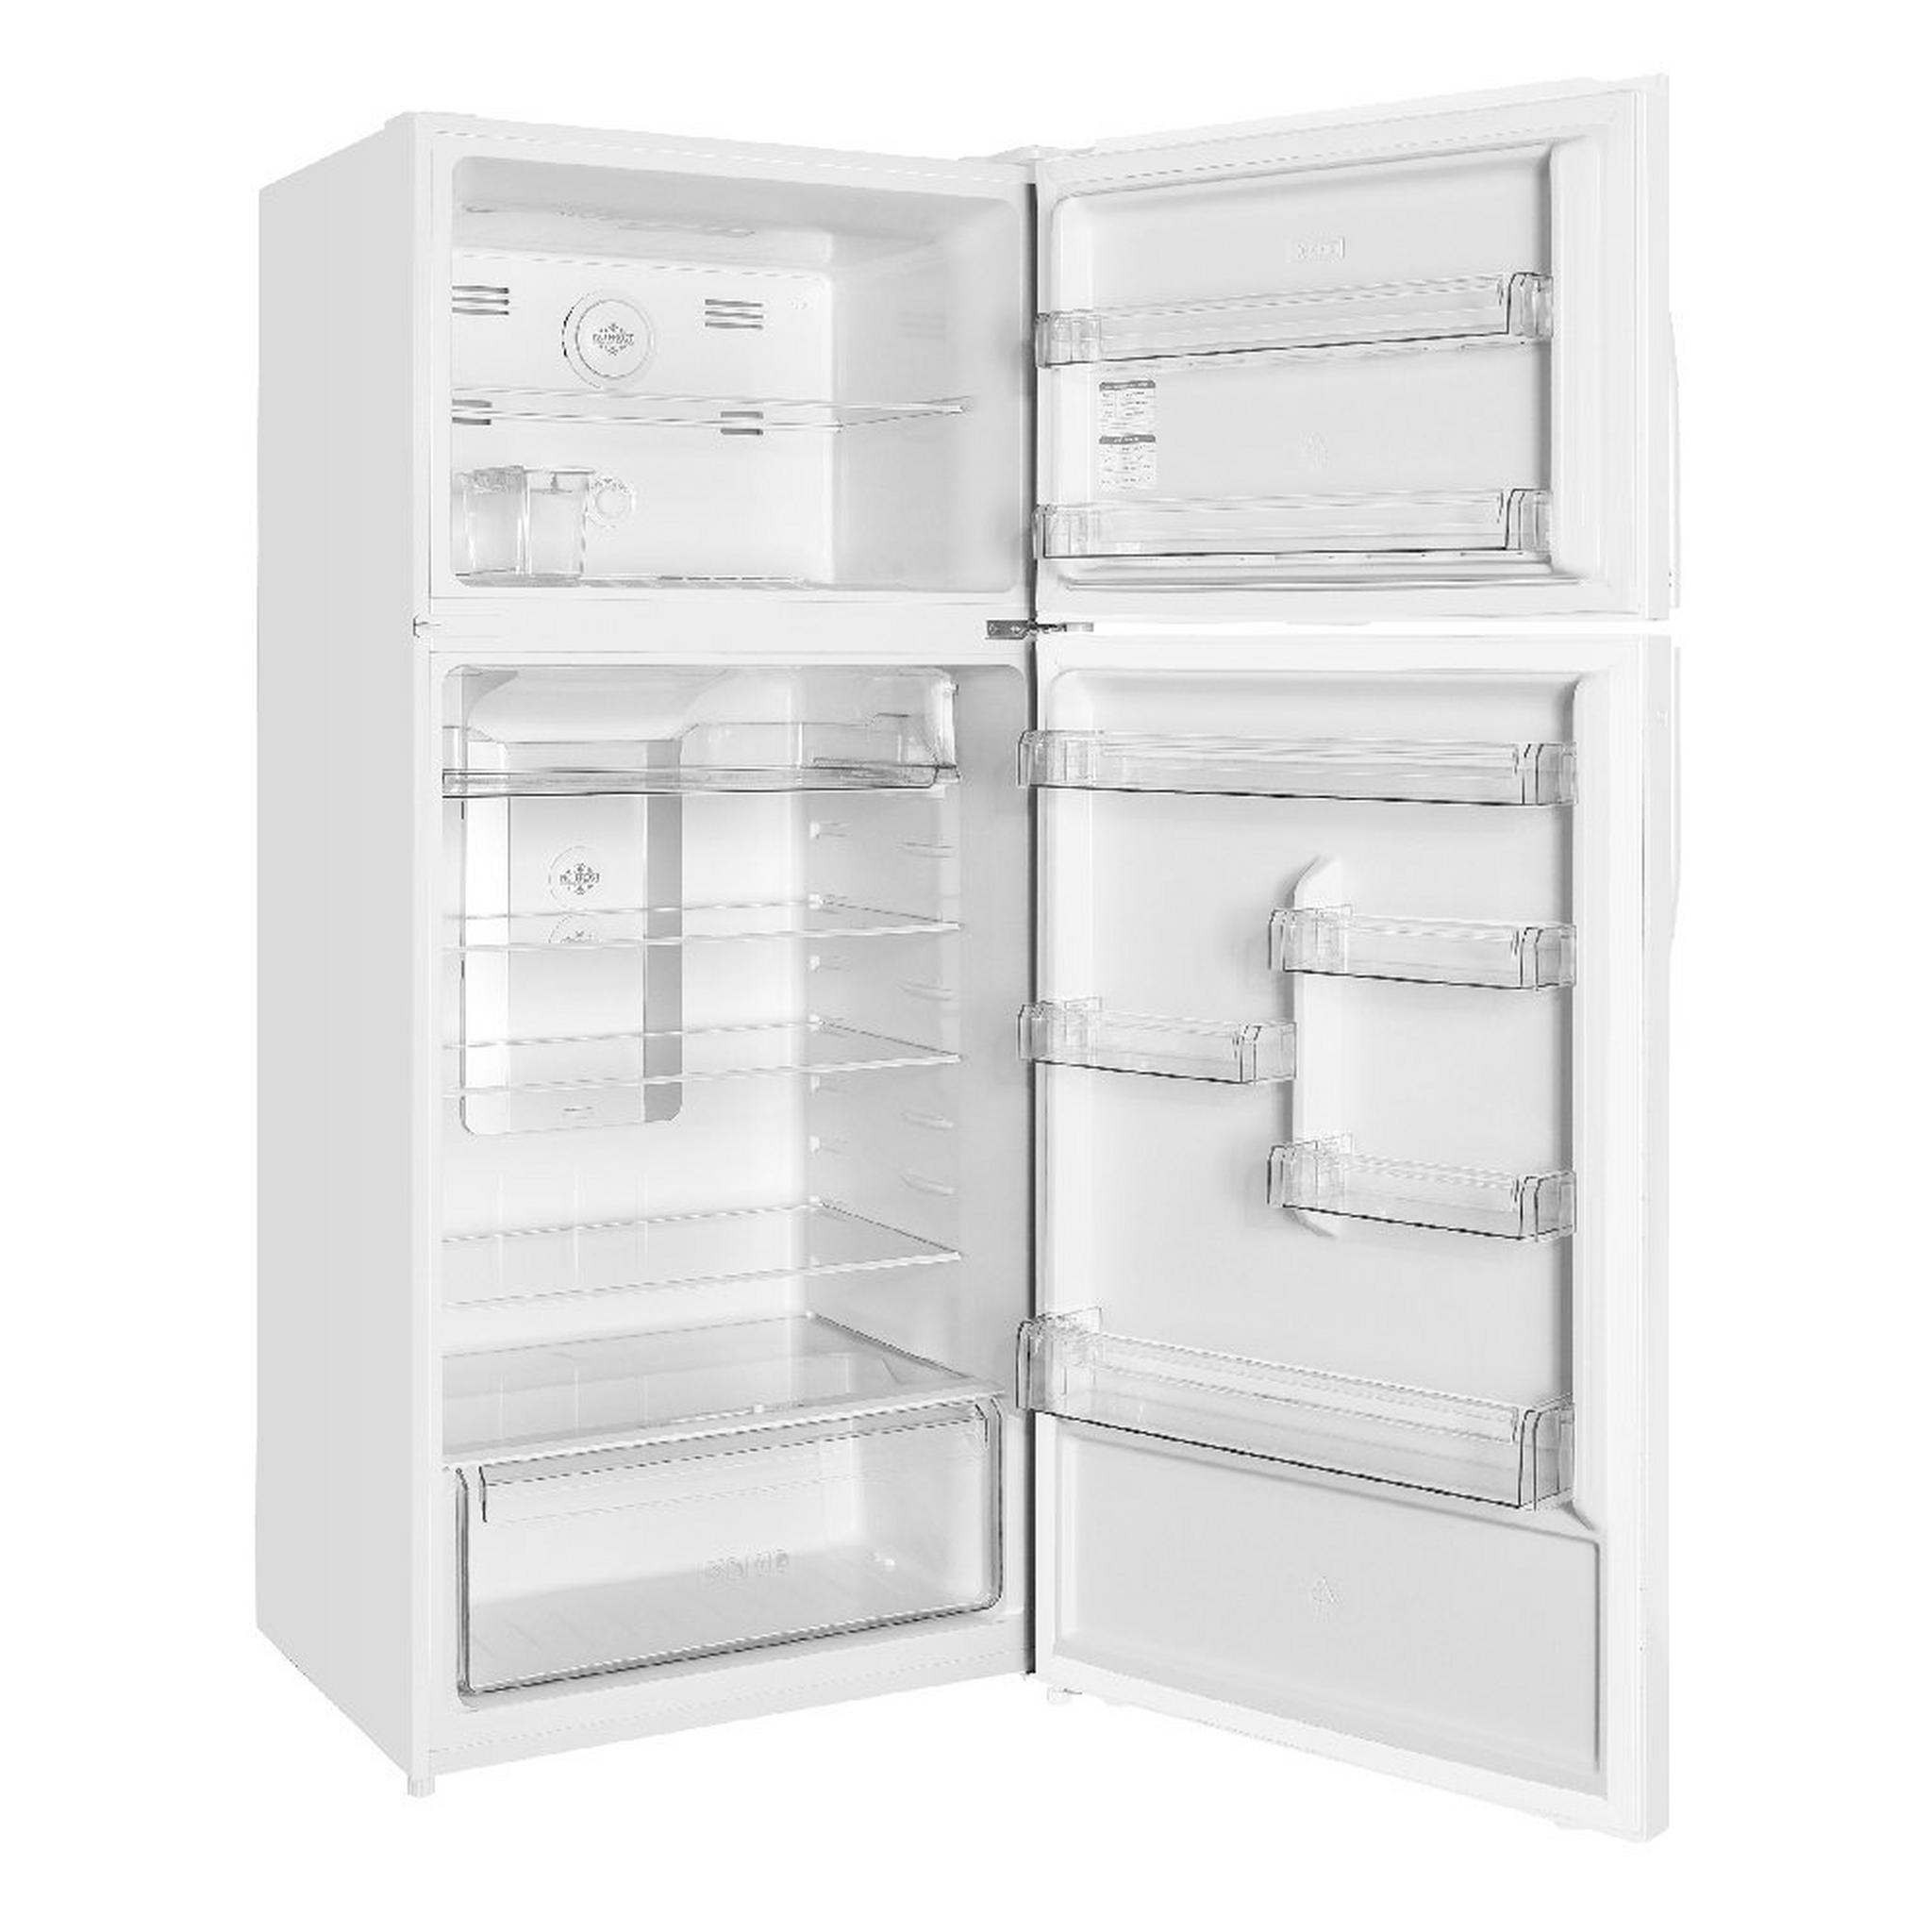 Wansa 20 CFT Top Mount Refrigerator (WRTG-571-NFWTC82) - White